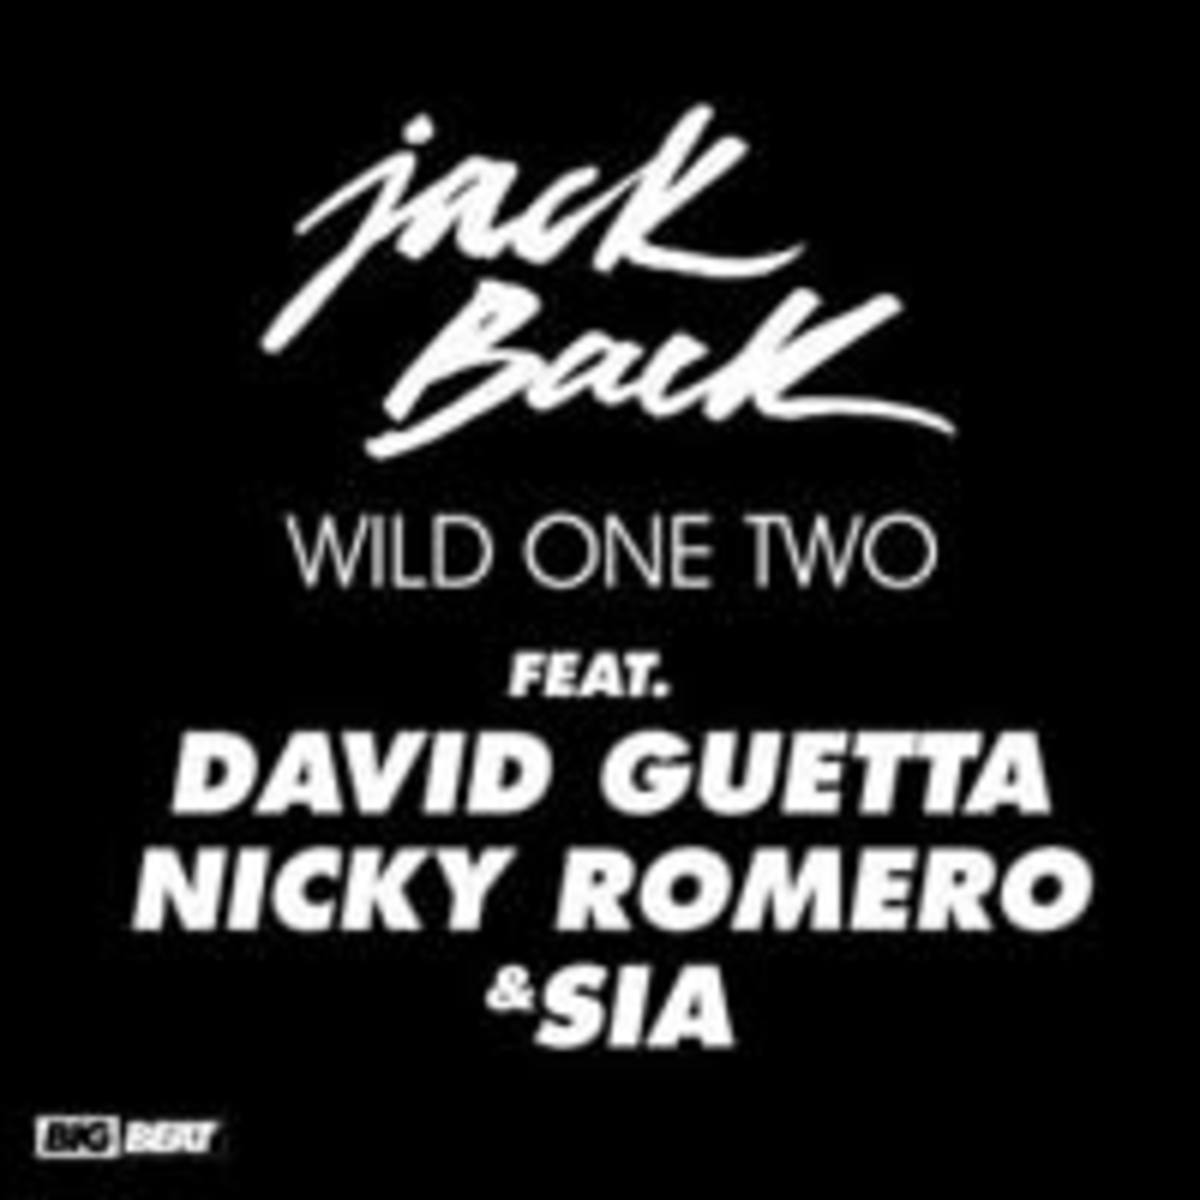 jack-back-ft-david-guetta-nicky-romero-sia-wild-one-two-original-mix